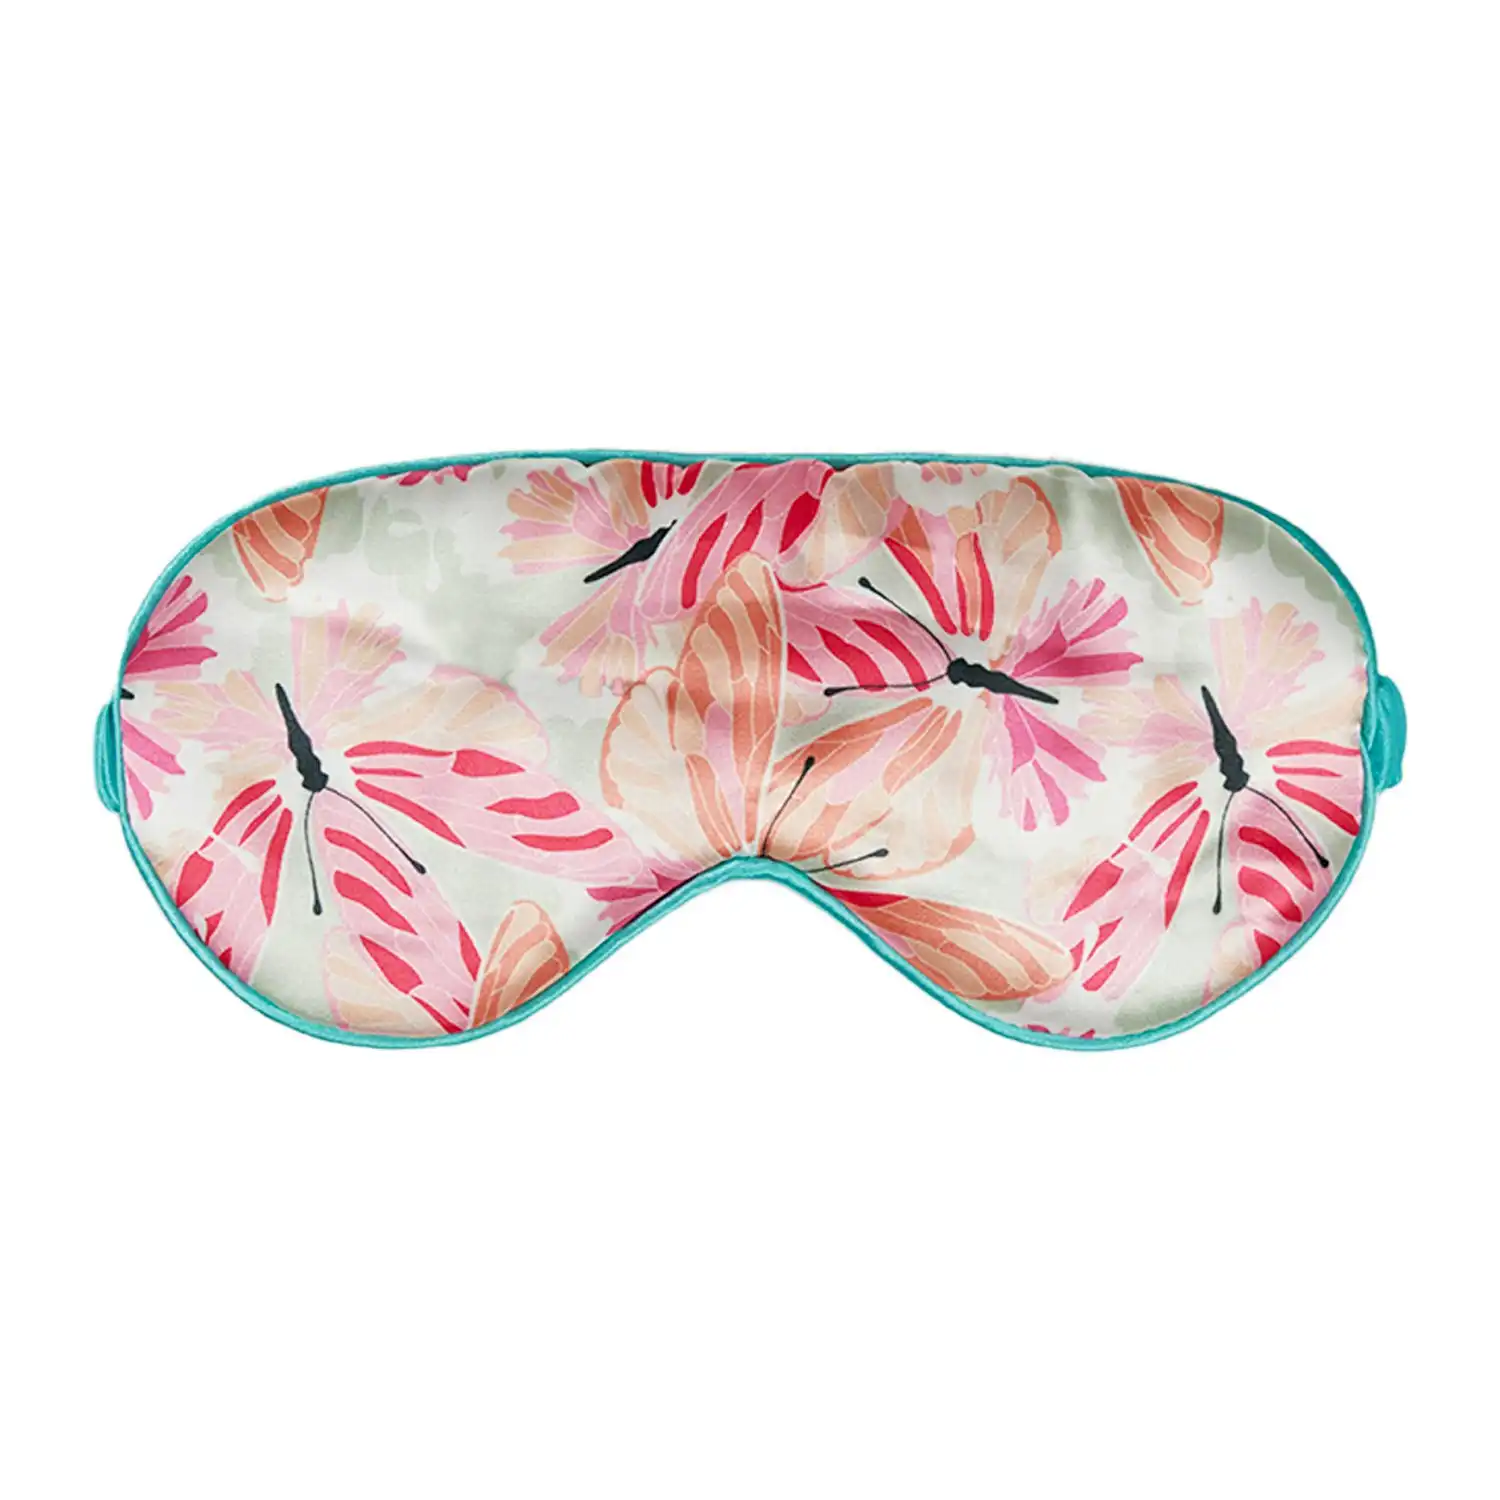 Splosh Wellness Butterflies Eye Mask/Silk Sleeping Eyeshade Cover 16.5x7.5cm